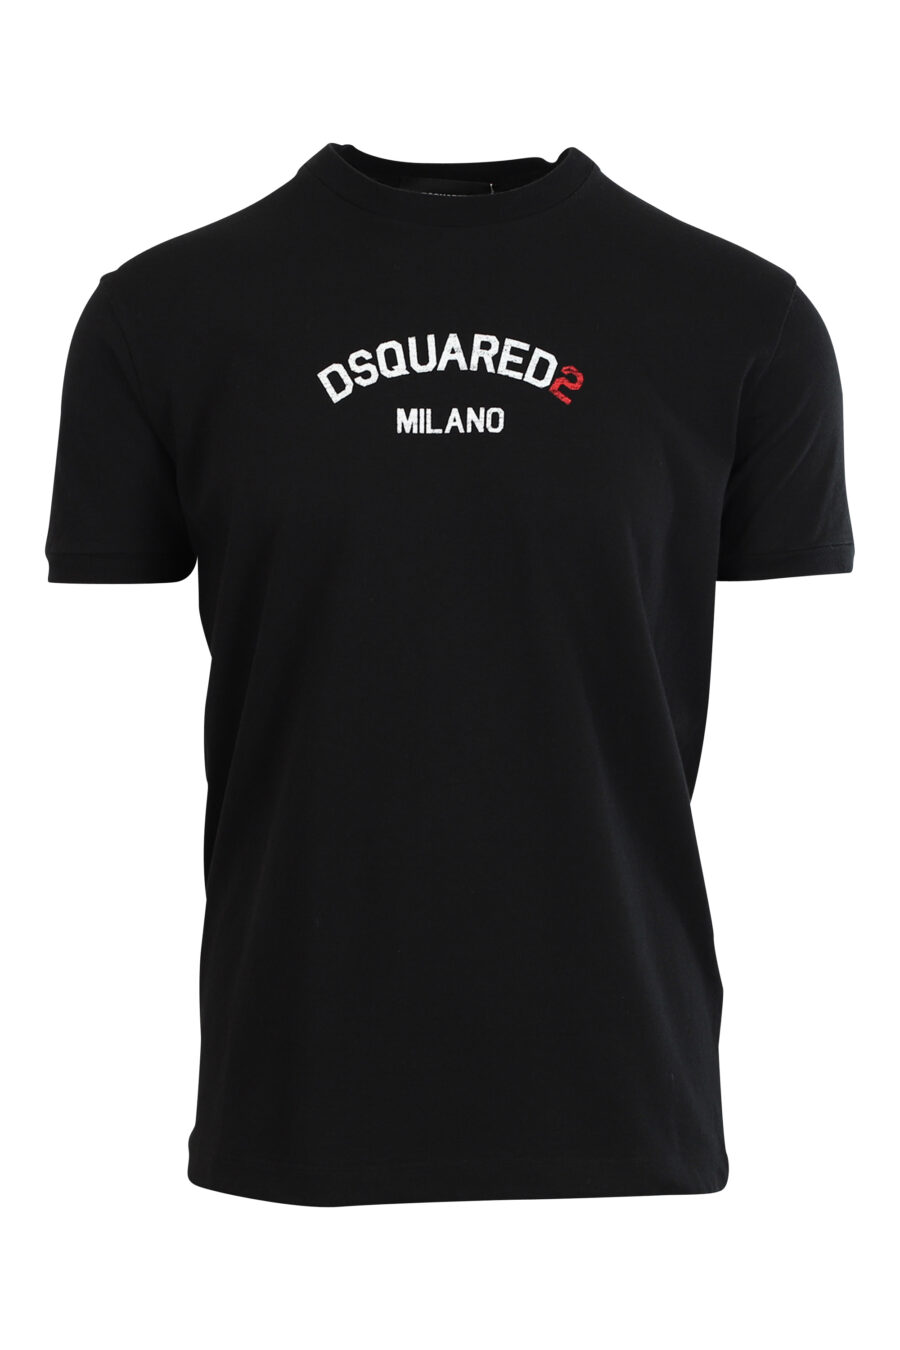 Schwarzes T-Shirt mit Minilogue "dsquared2 milano" - 8058049836090